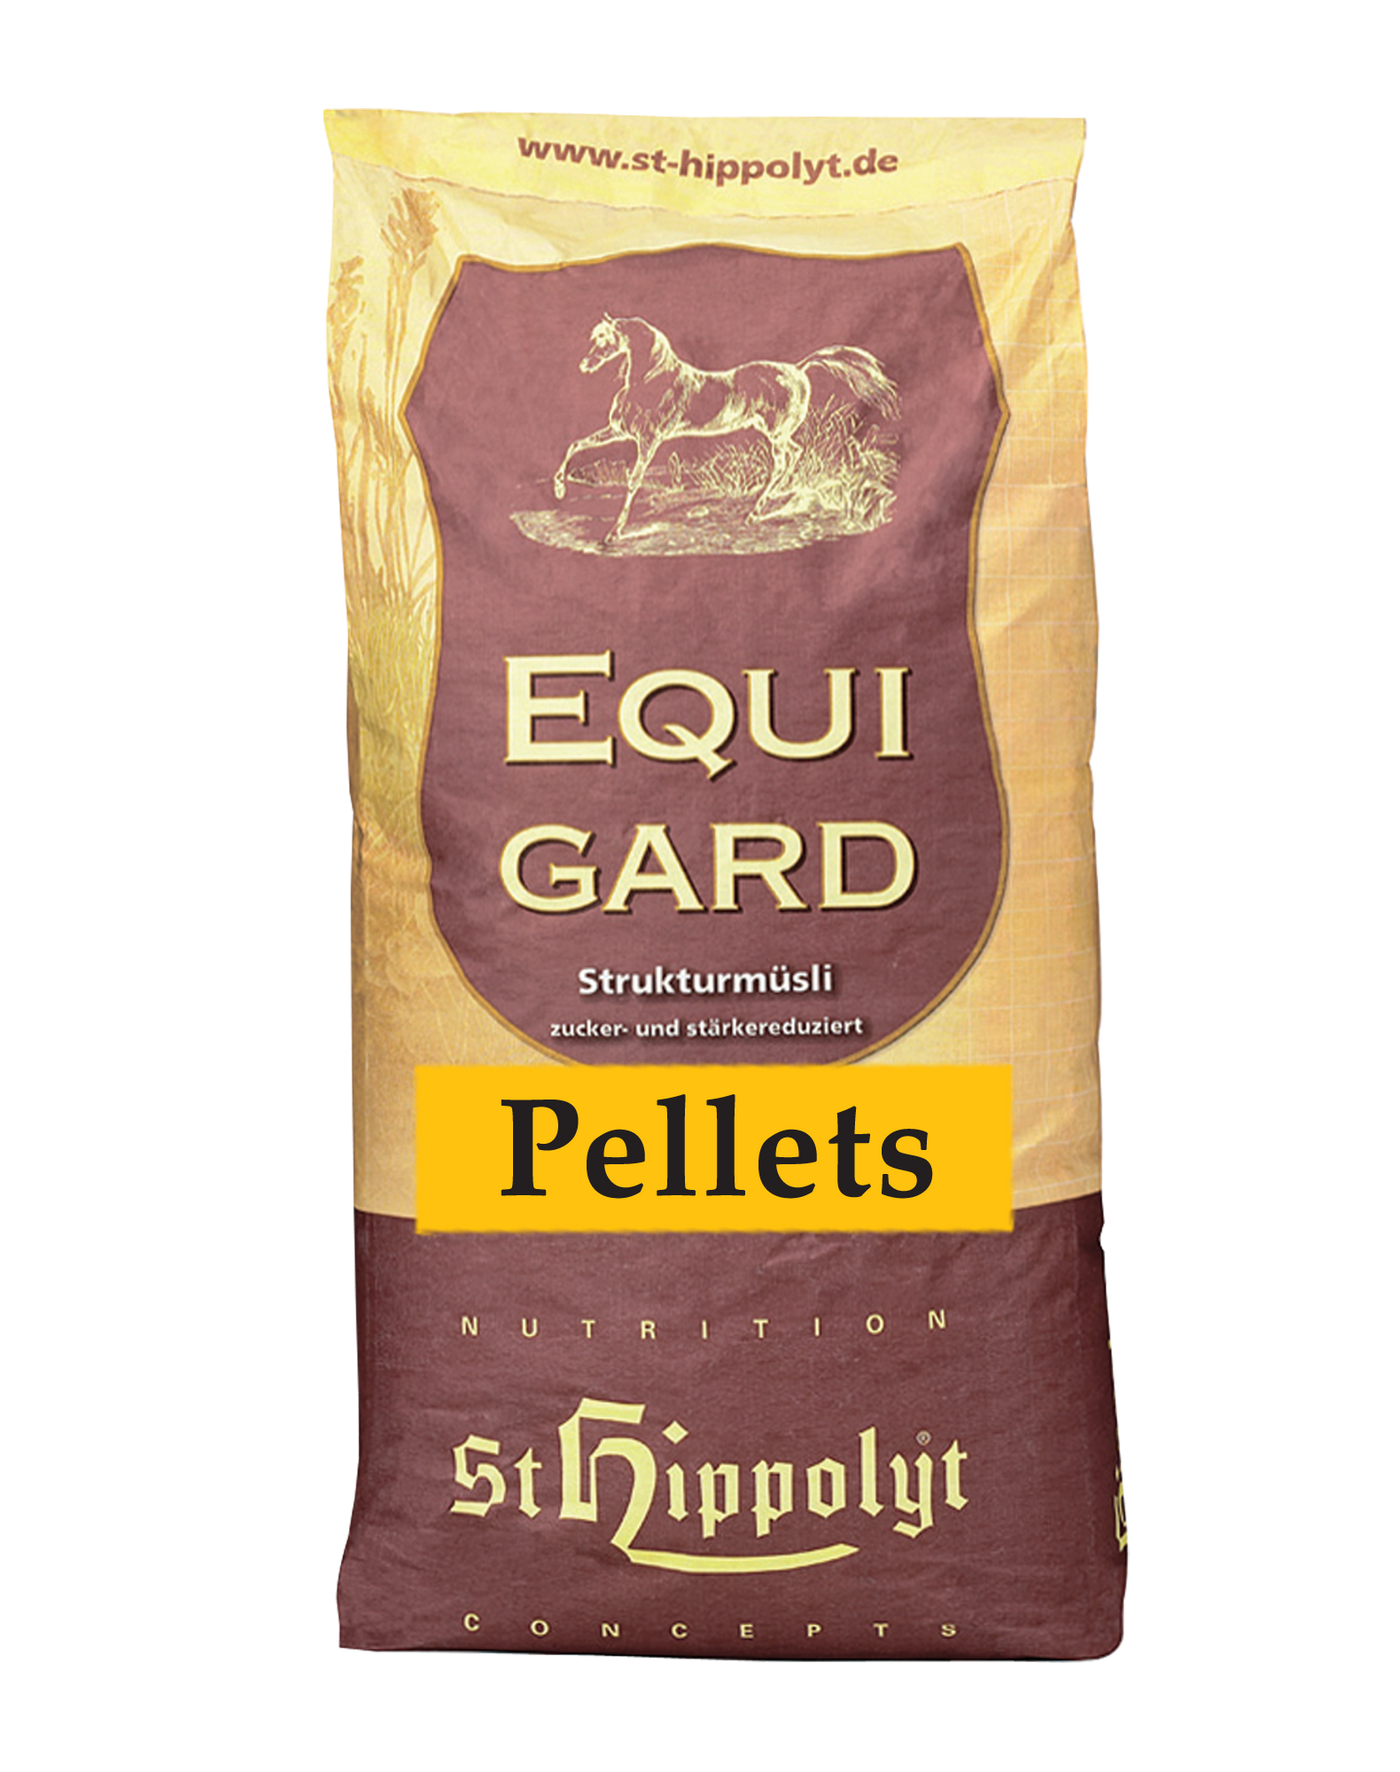 EquiGard Pellets